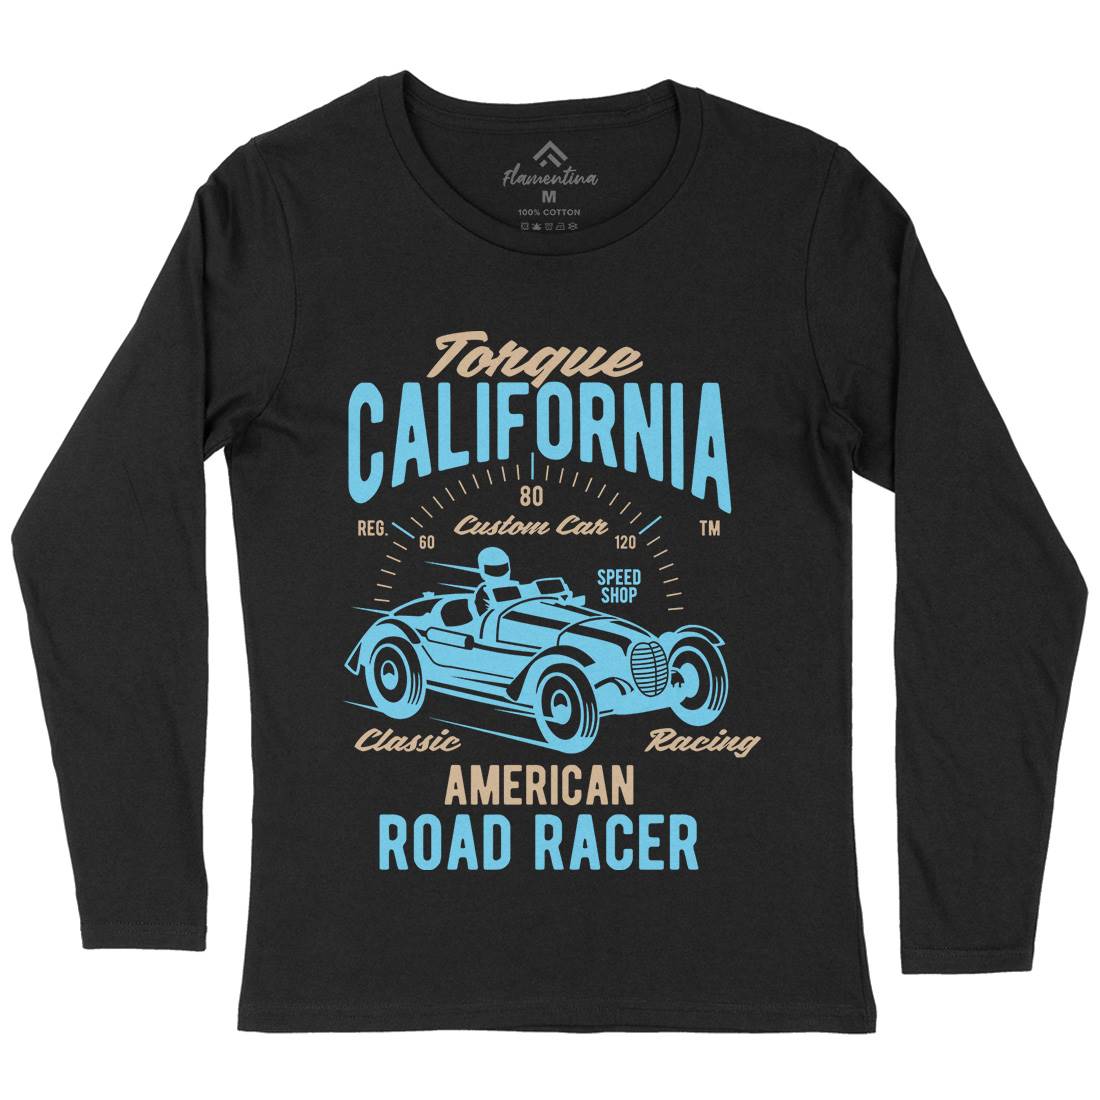 Torque California Womens Long Sleeve T-Shirt Cars B468